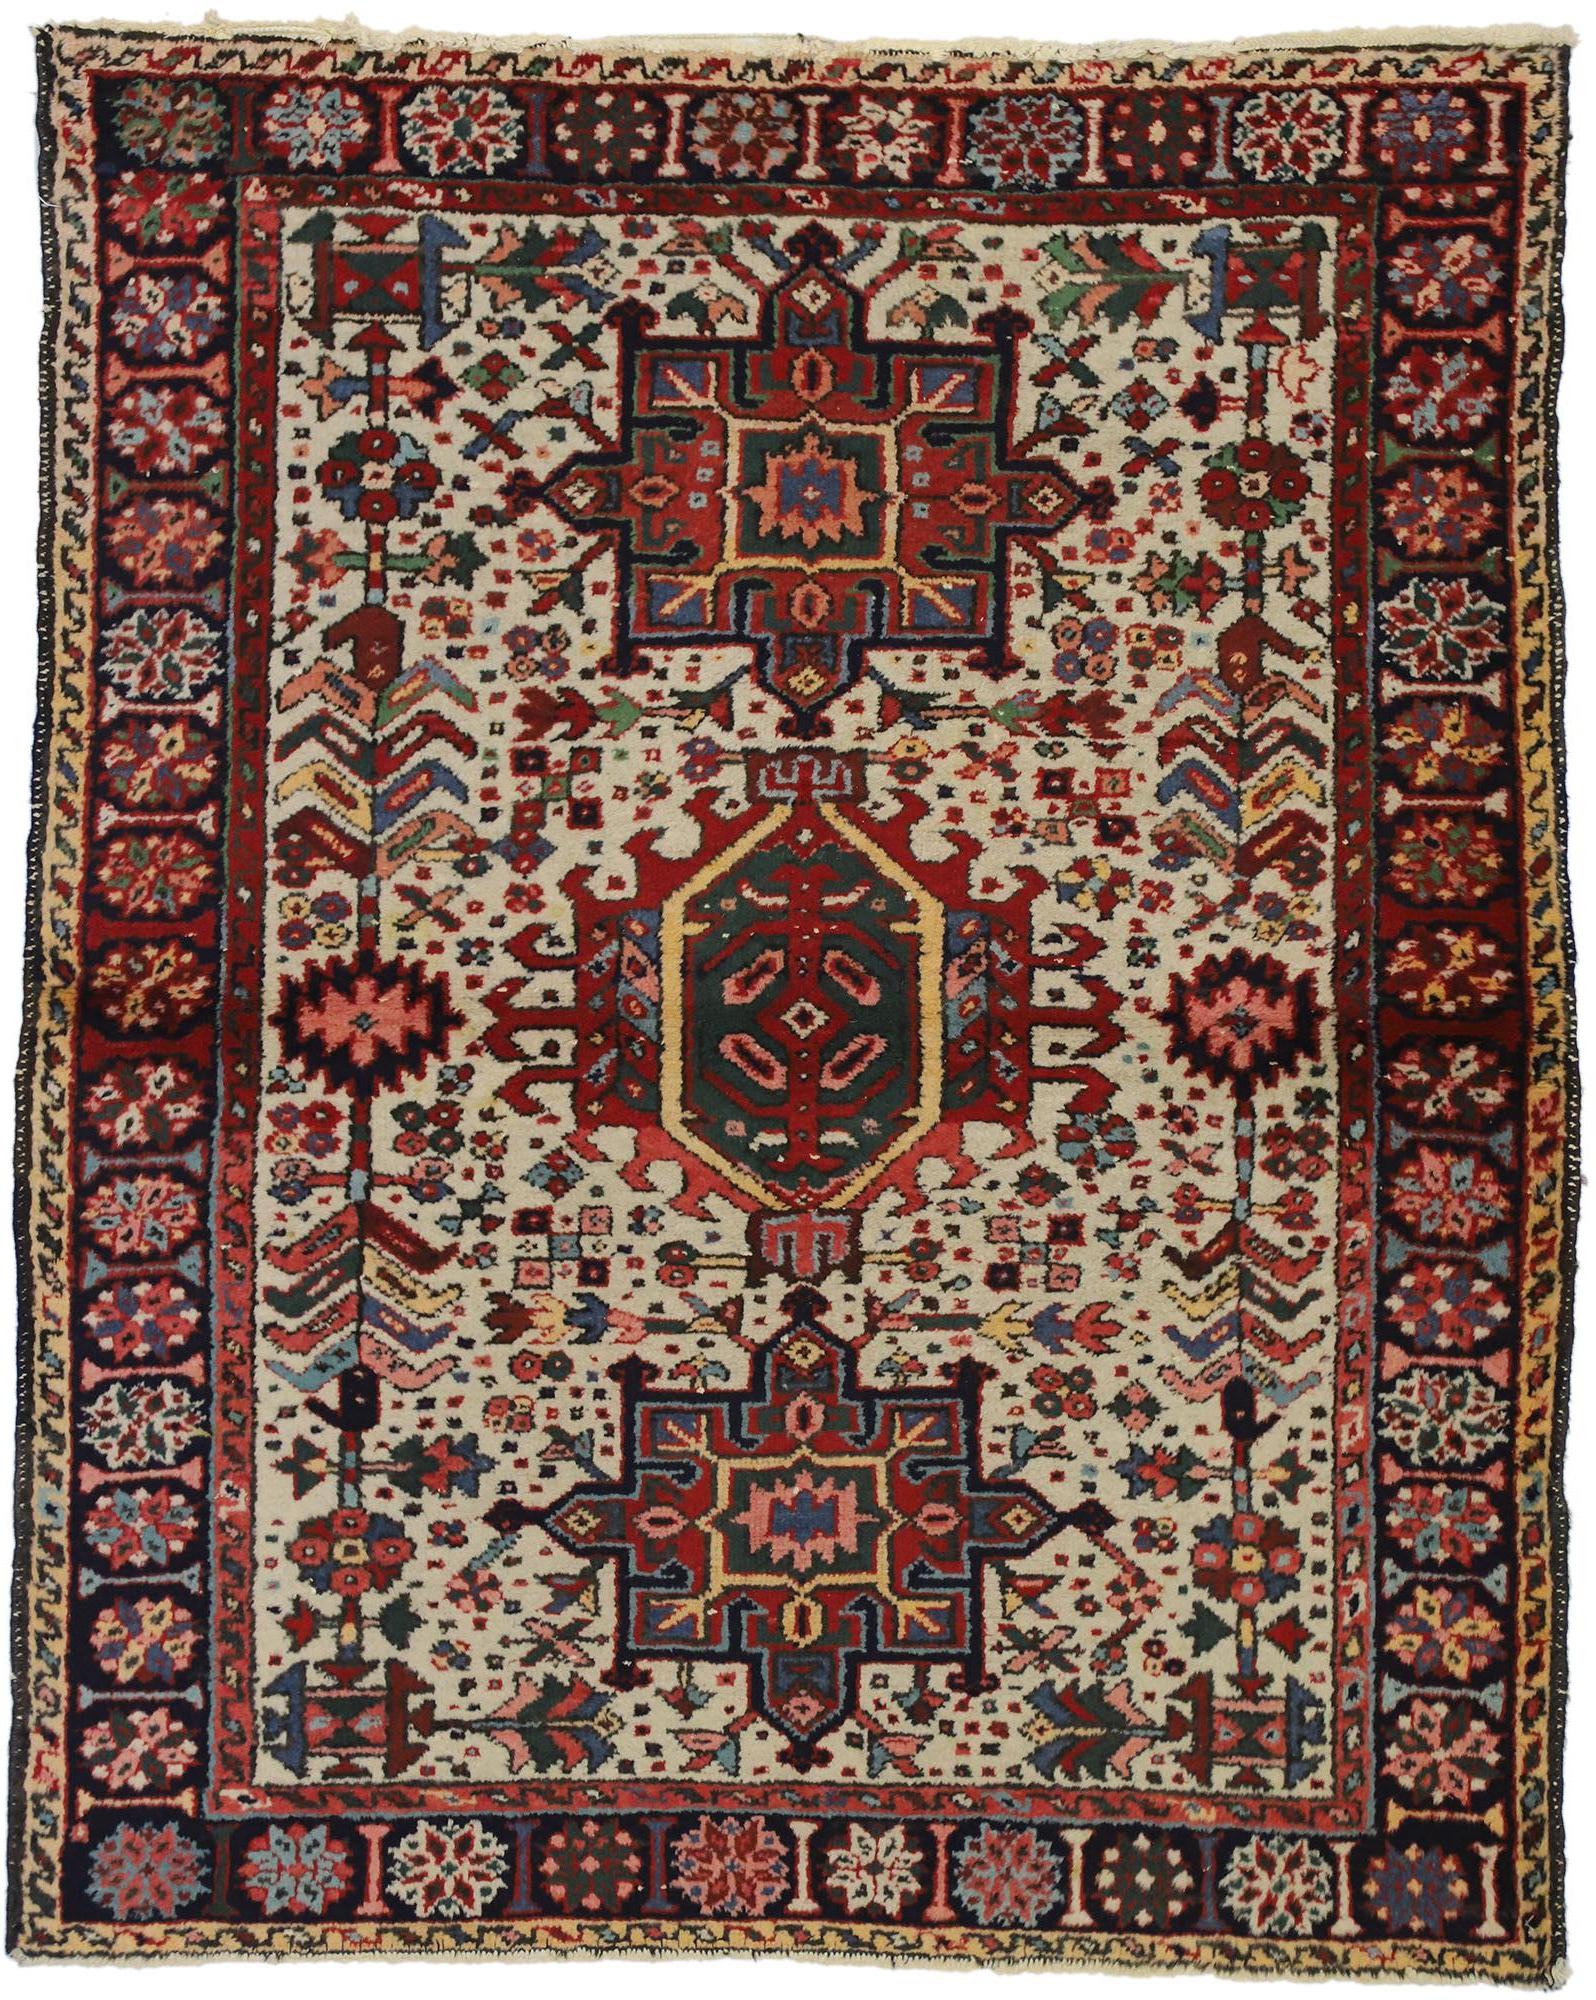 Antique Persian Heriz Karaja Rug with Mid-Century Modern Style, Accent Rug